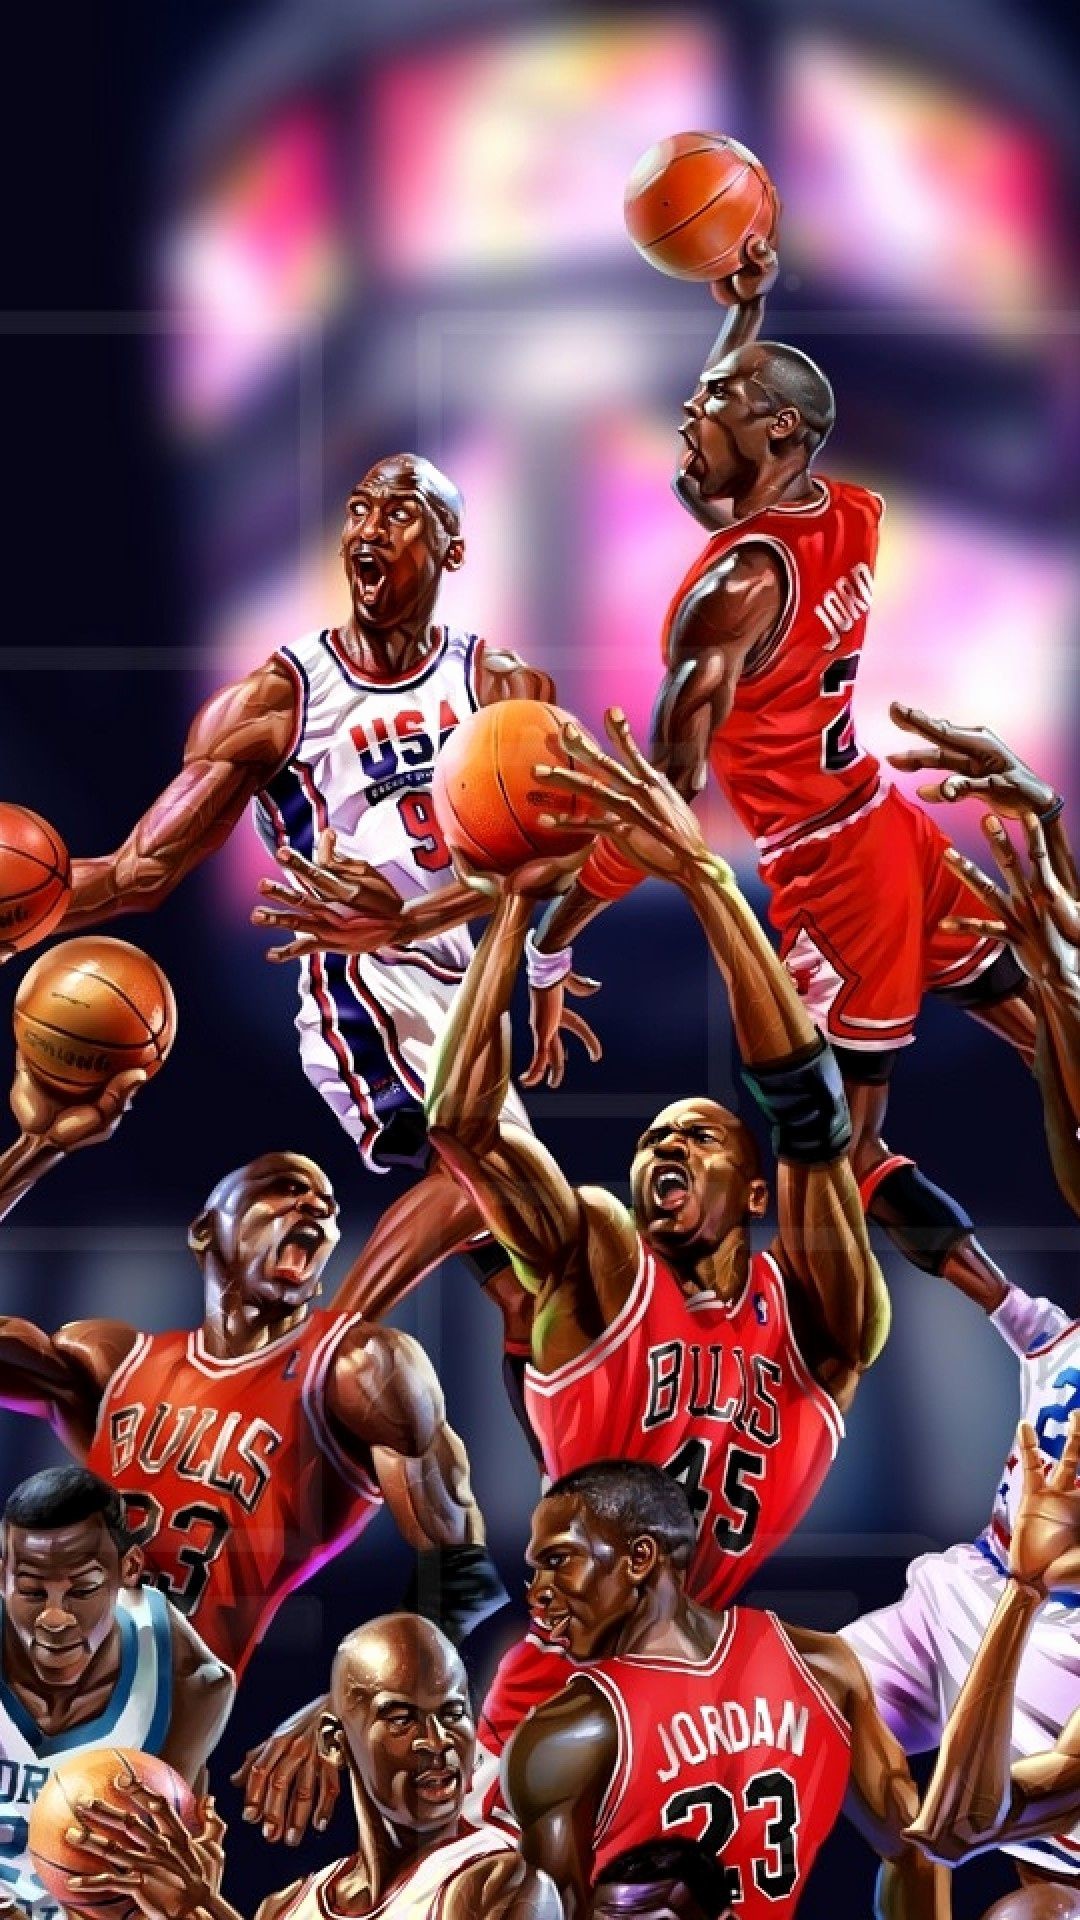 nba phone wallpaper,basketball player,team,product,player,fan